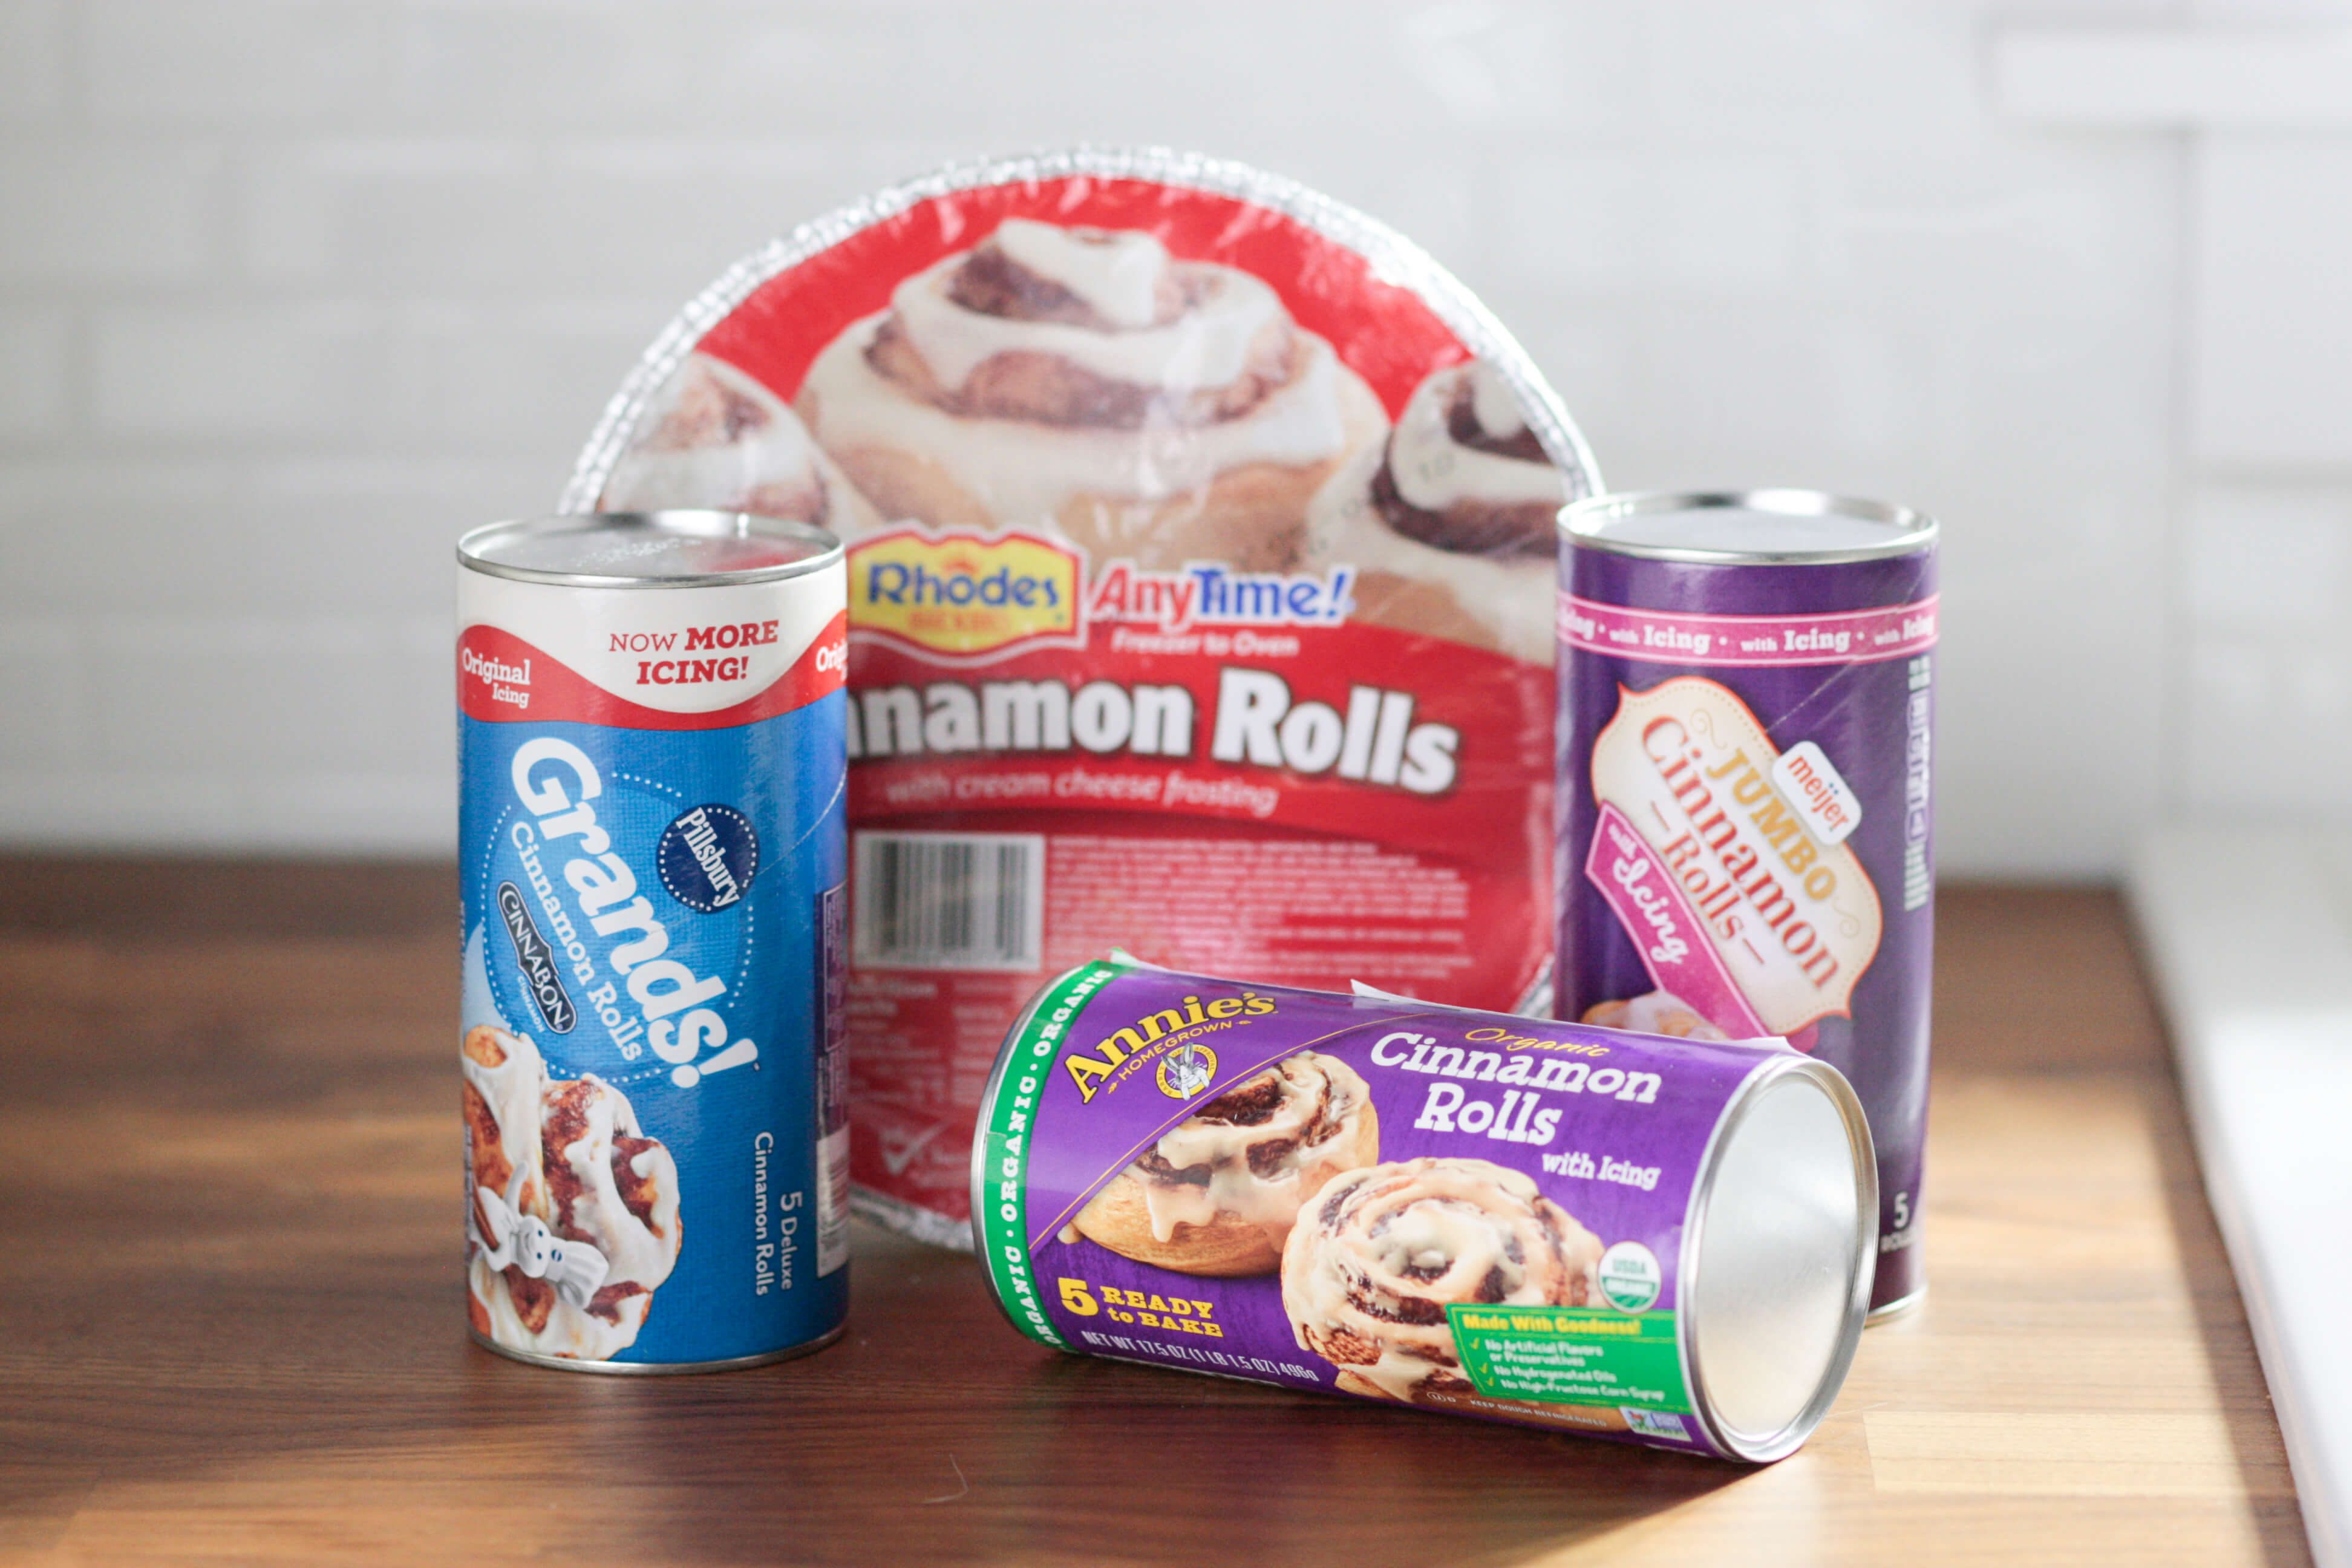 We Tried 4 Popular Brands of Packaged Cinnamon Rolls